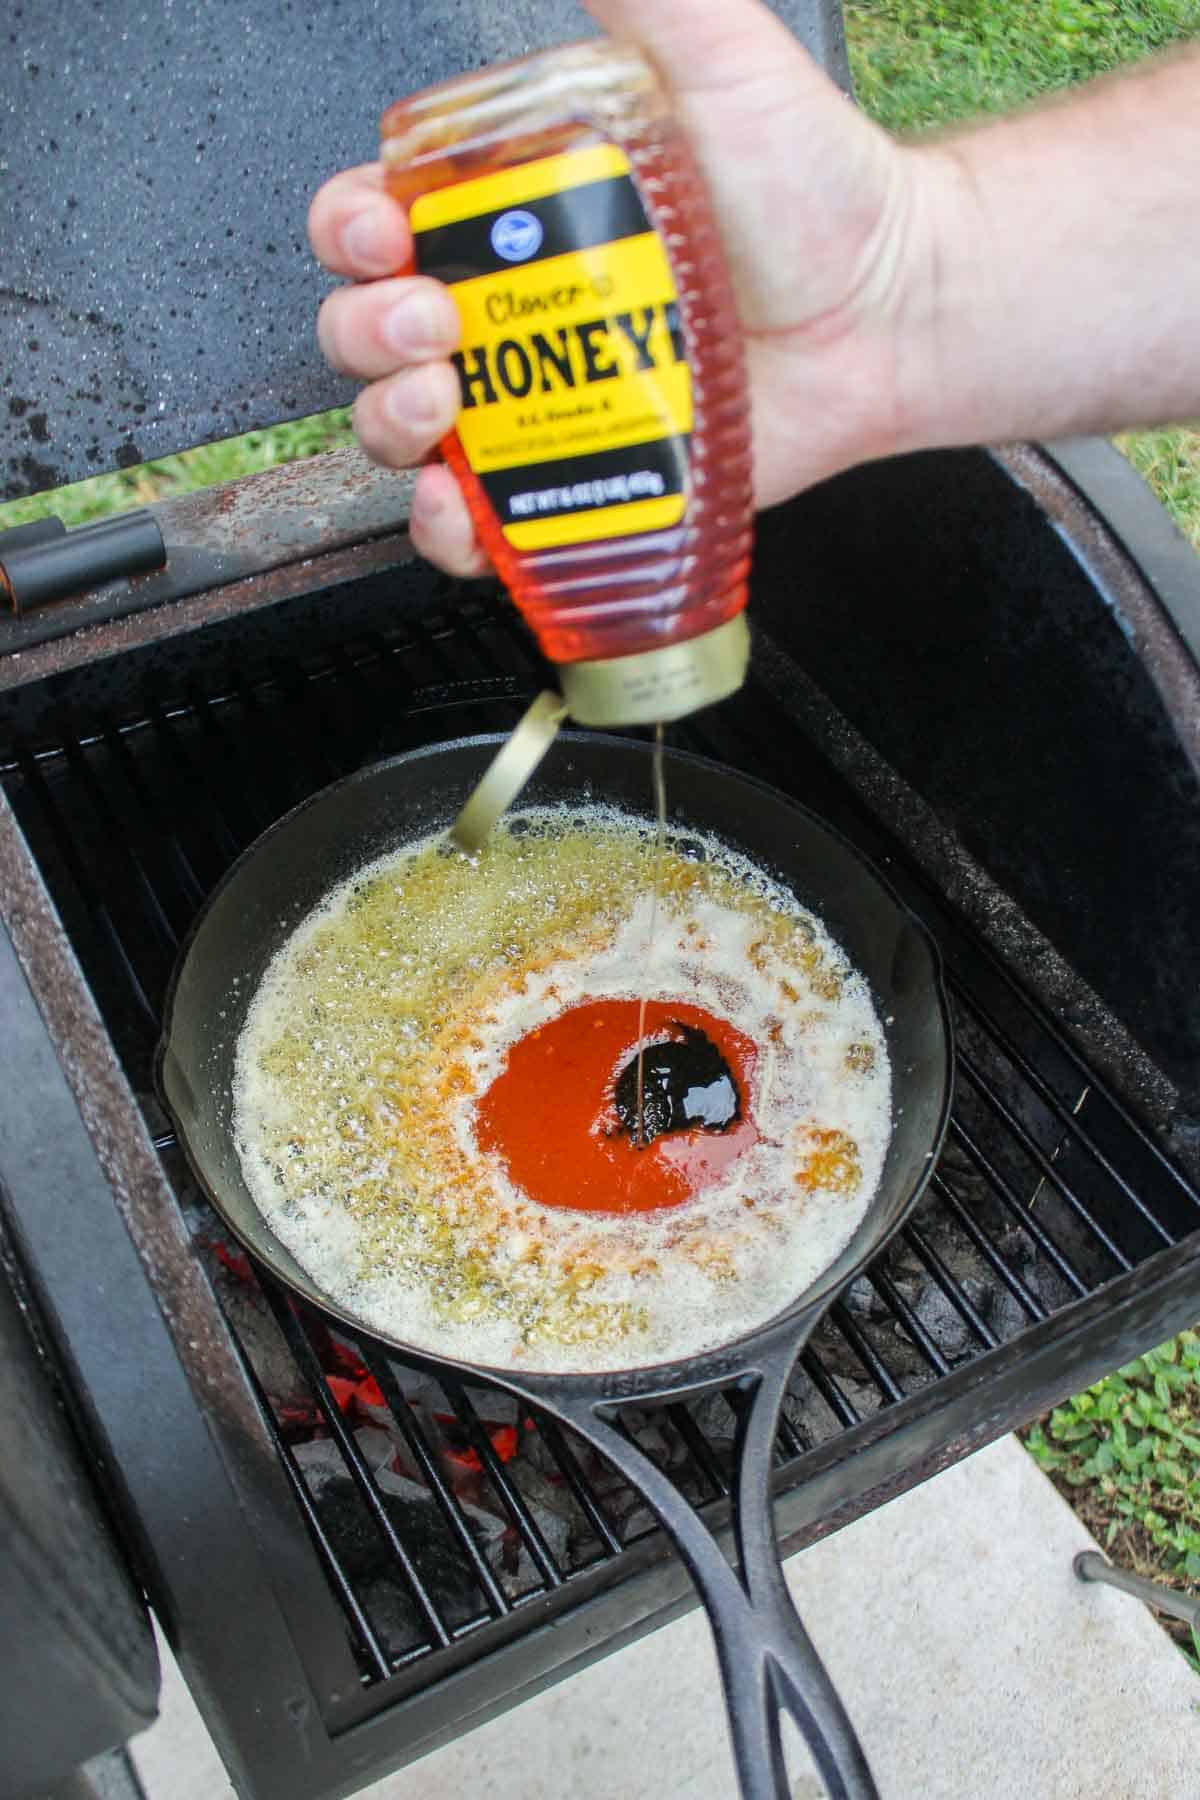 Mixing together the hot honey garlic sauce.